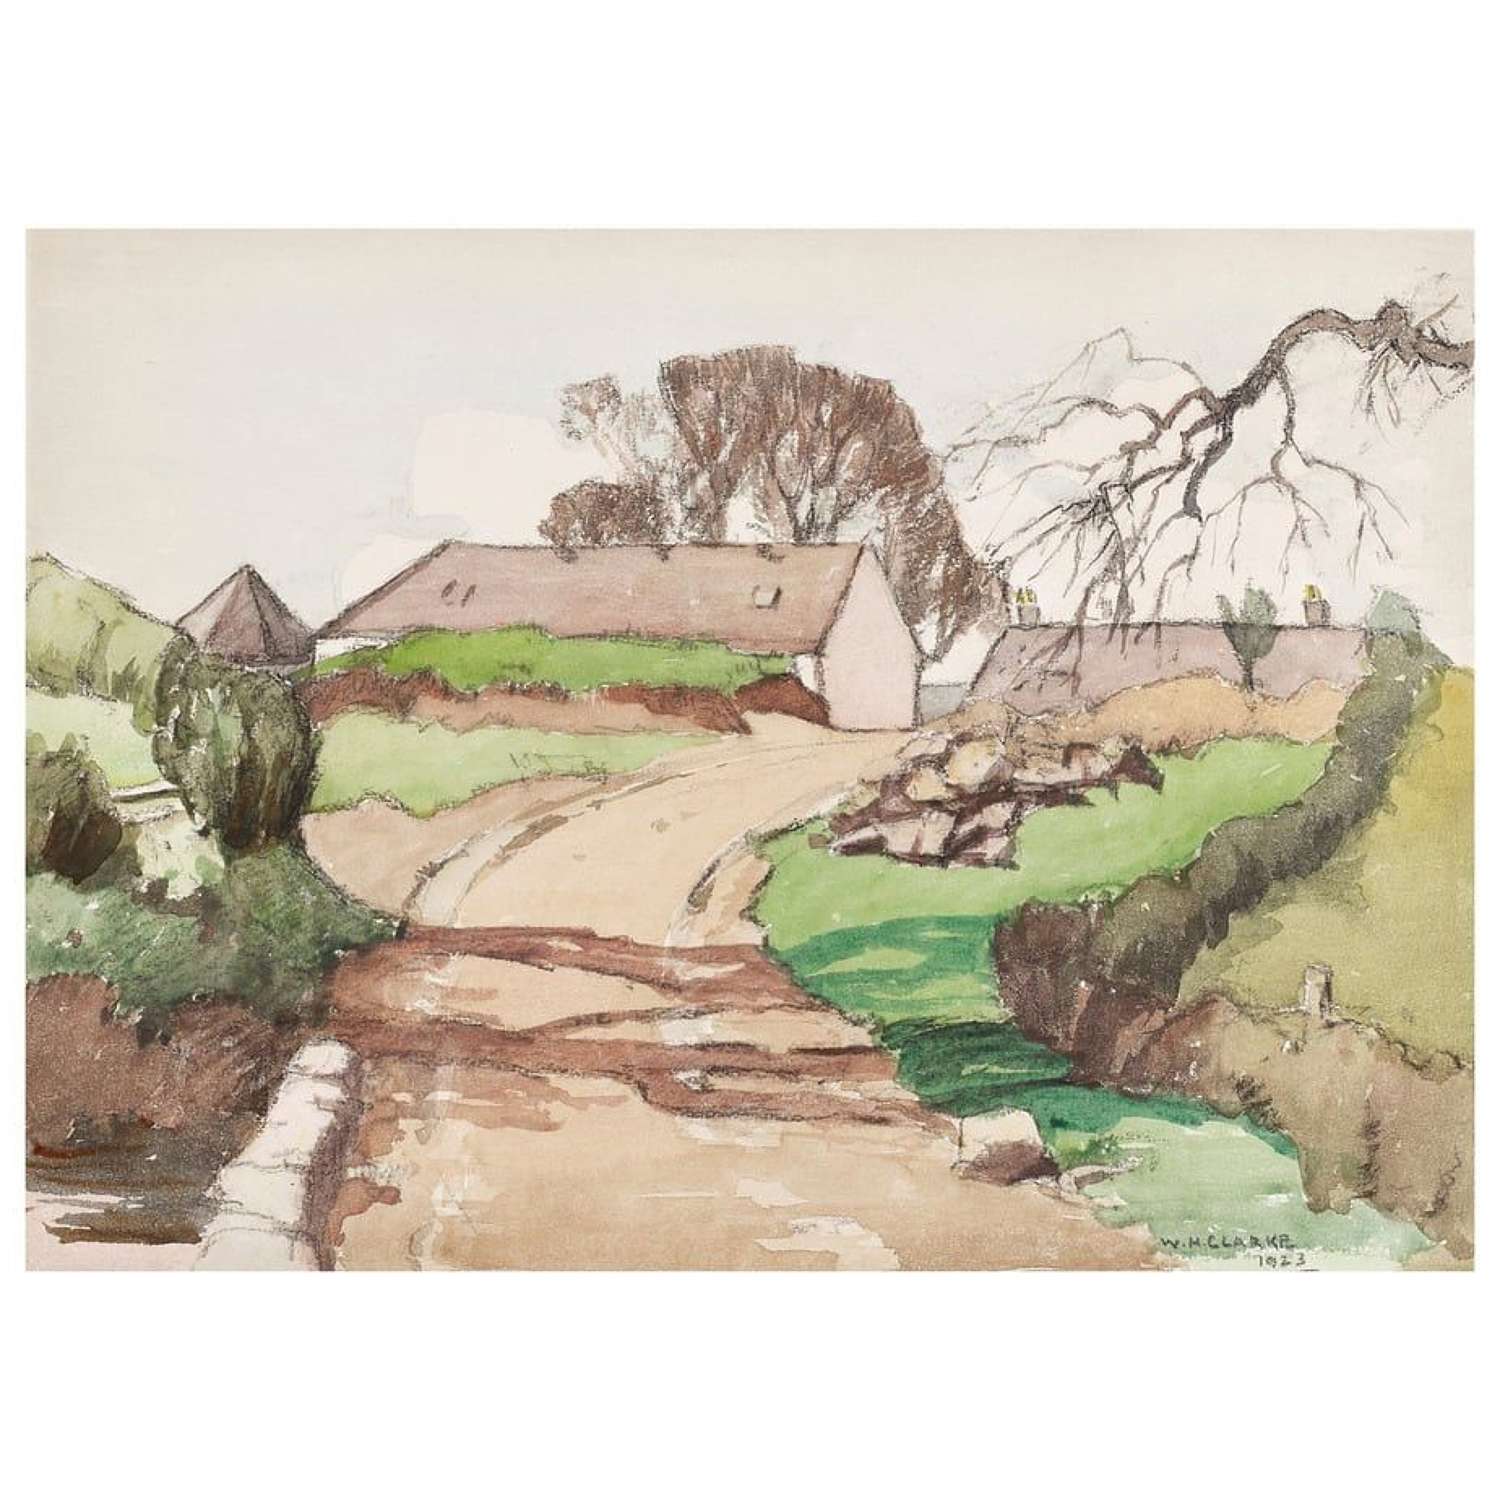 Wiliam Hanna Clarke  - A Galloway Farm